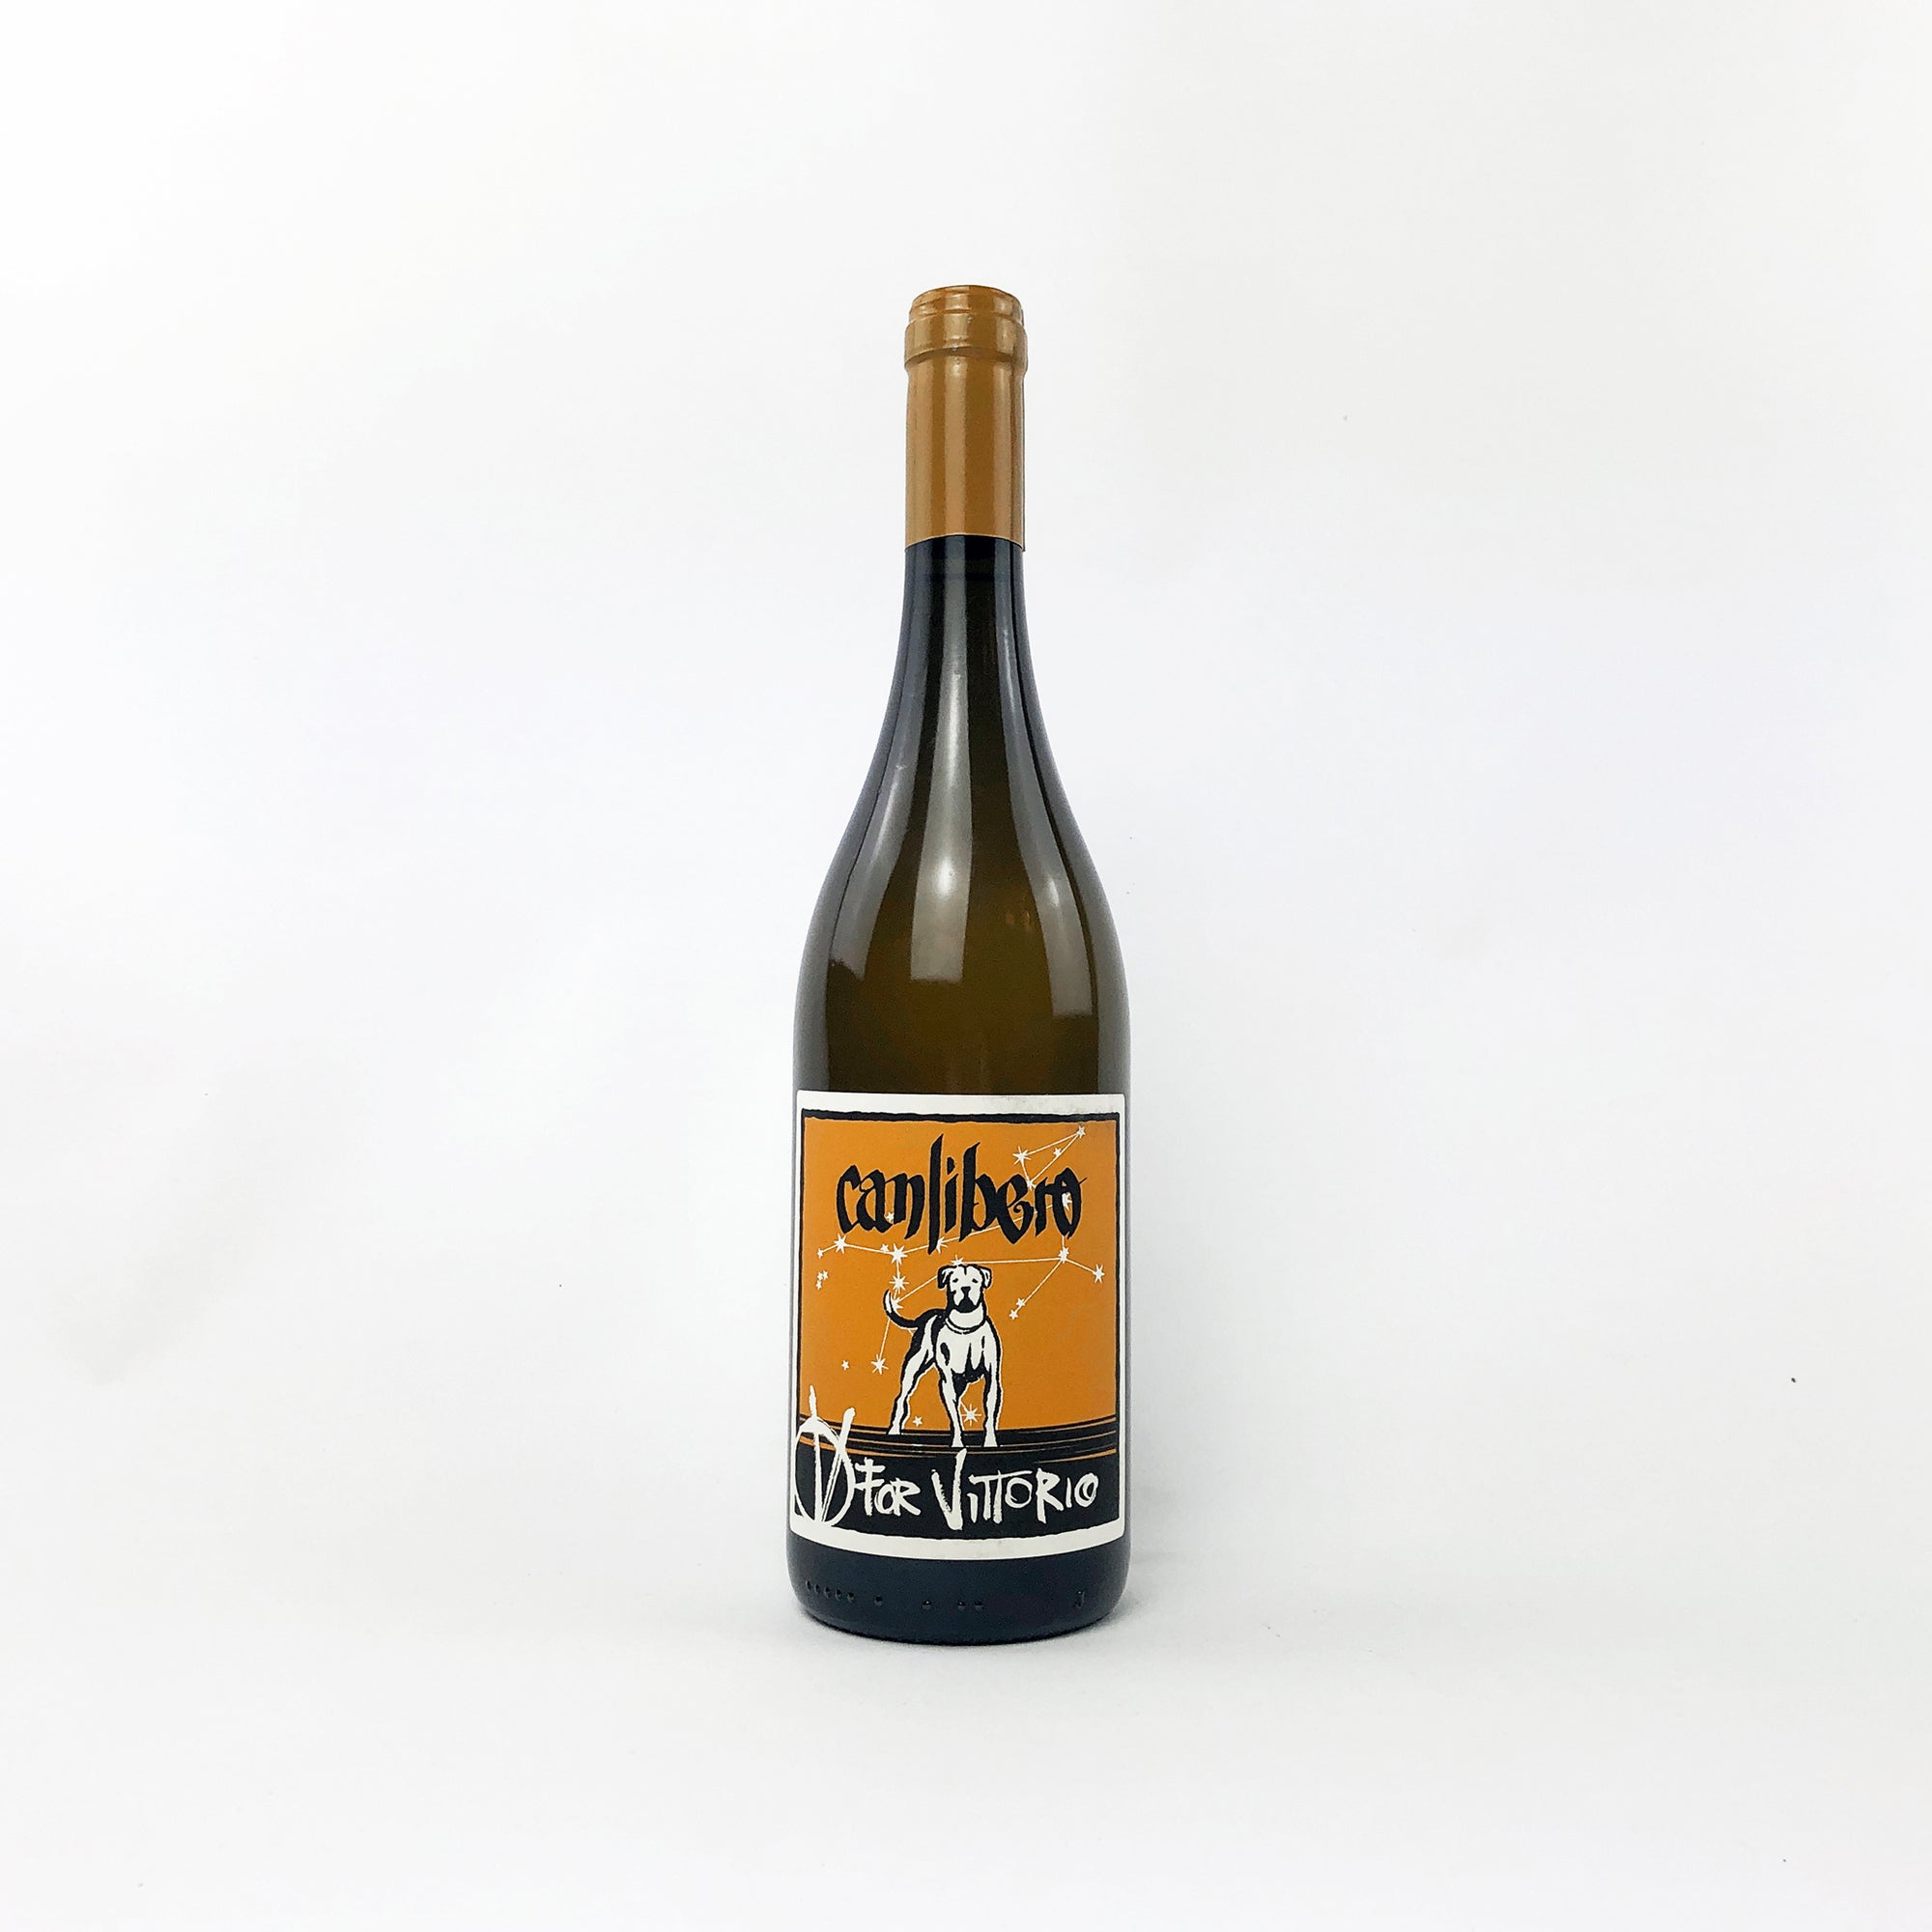 Canlibero, Vittorio, natural wine bottle, Orangewine, Campania, Italy